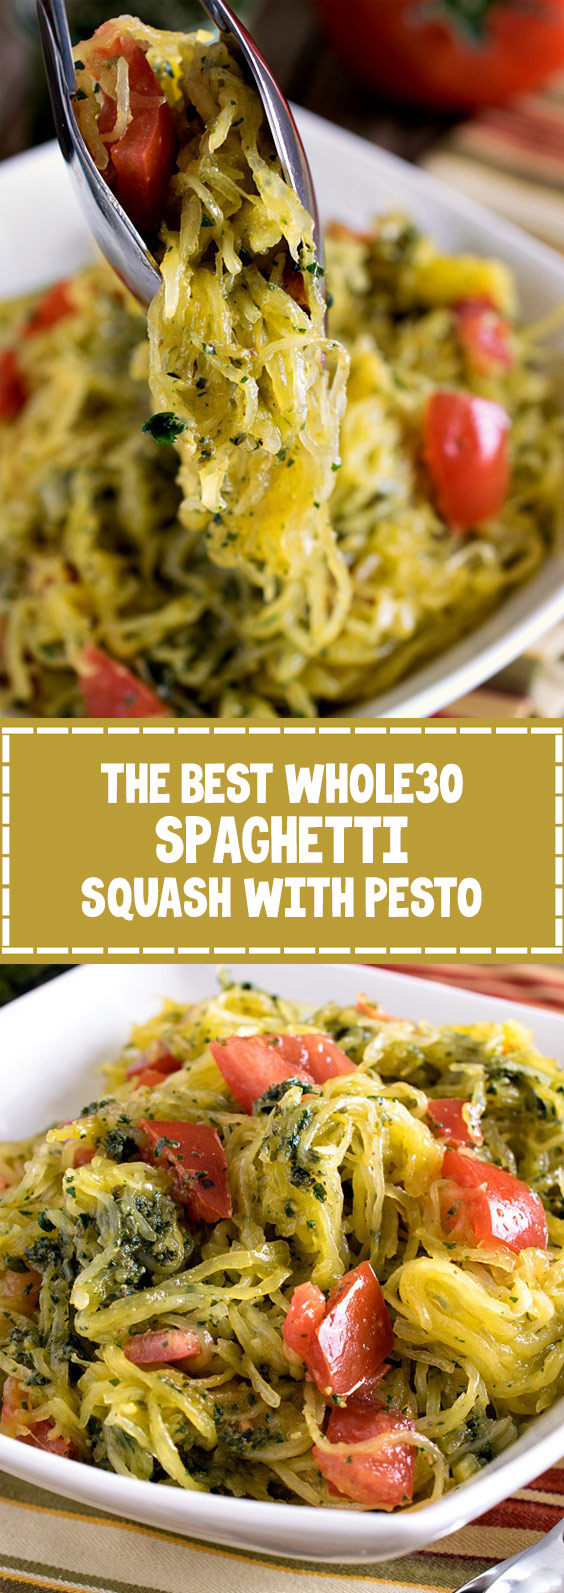 The Best Whole30 Spaghetti Squash with Pesto - 25idnews